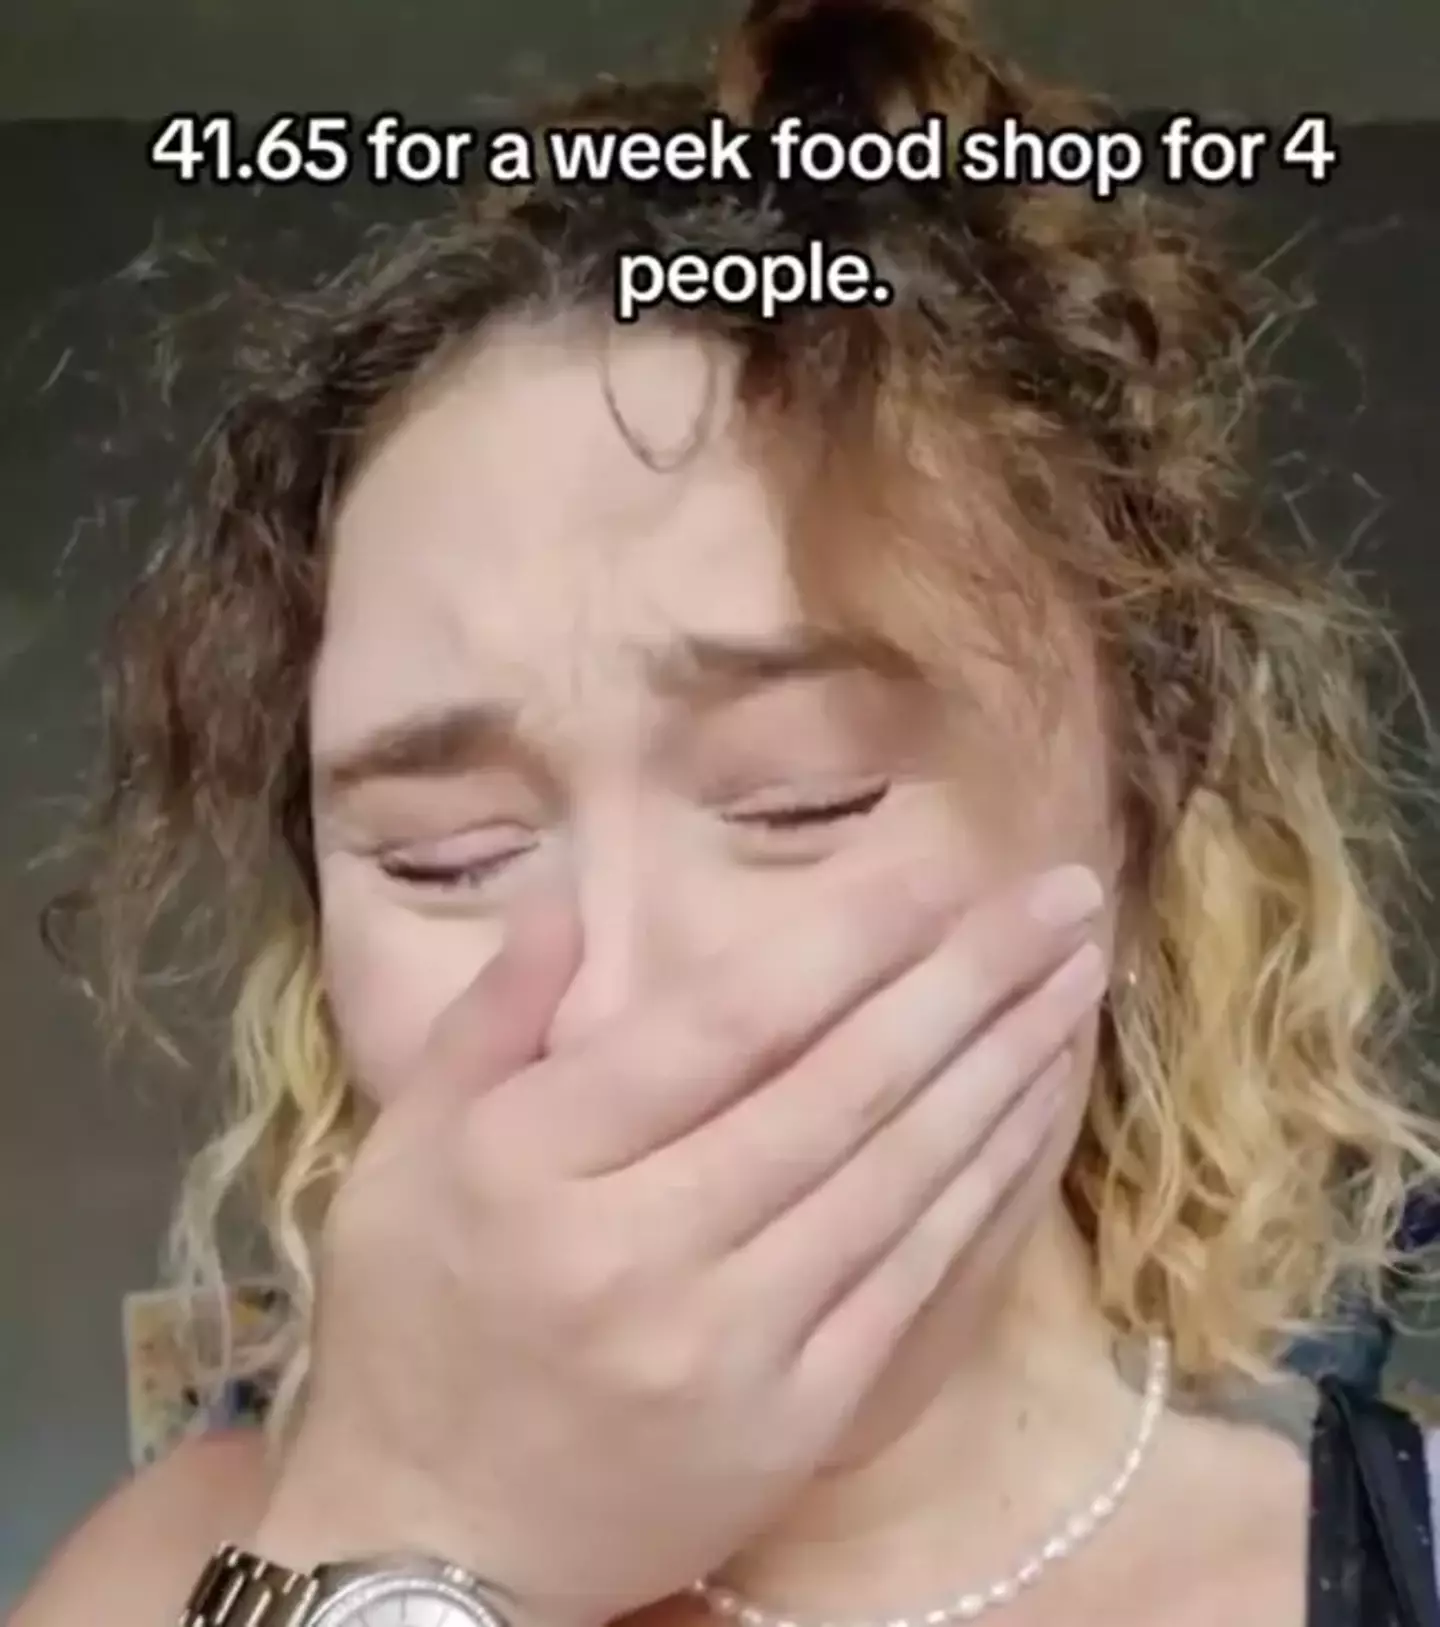 A kind stranger helped her pay for her food shop.